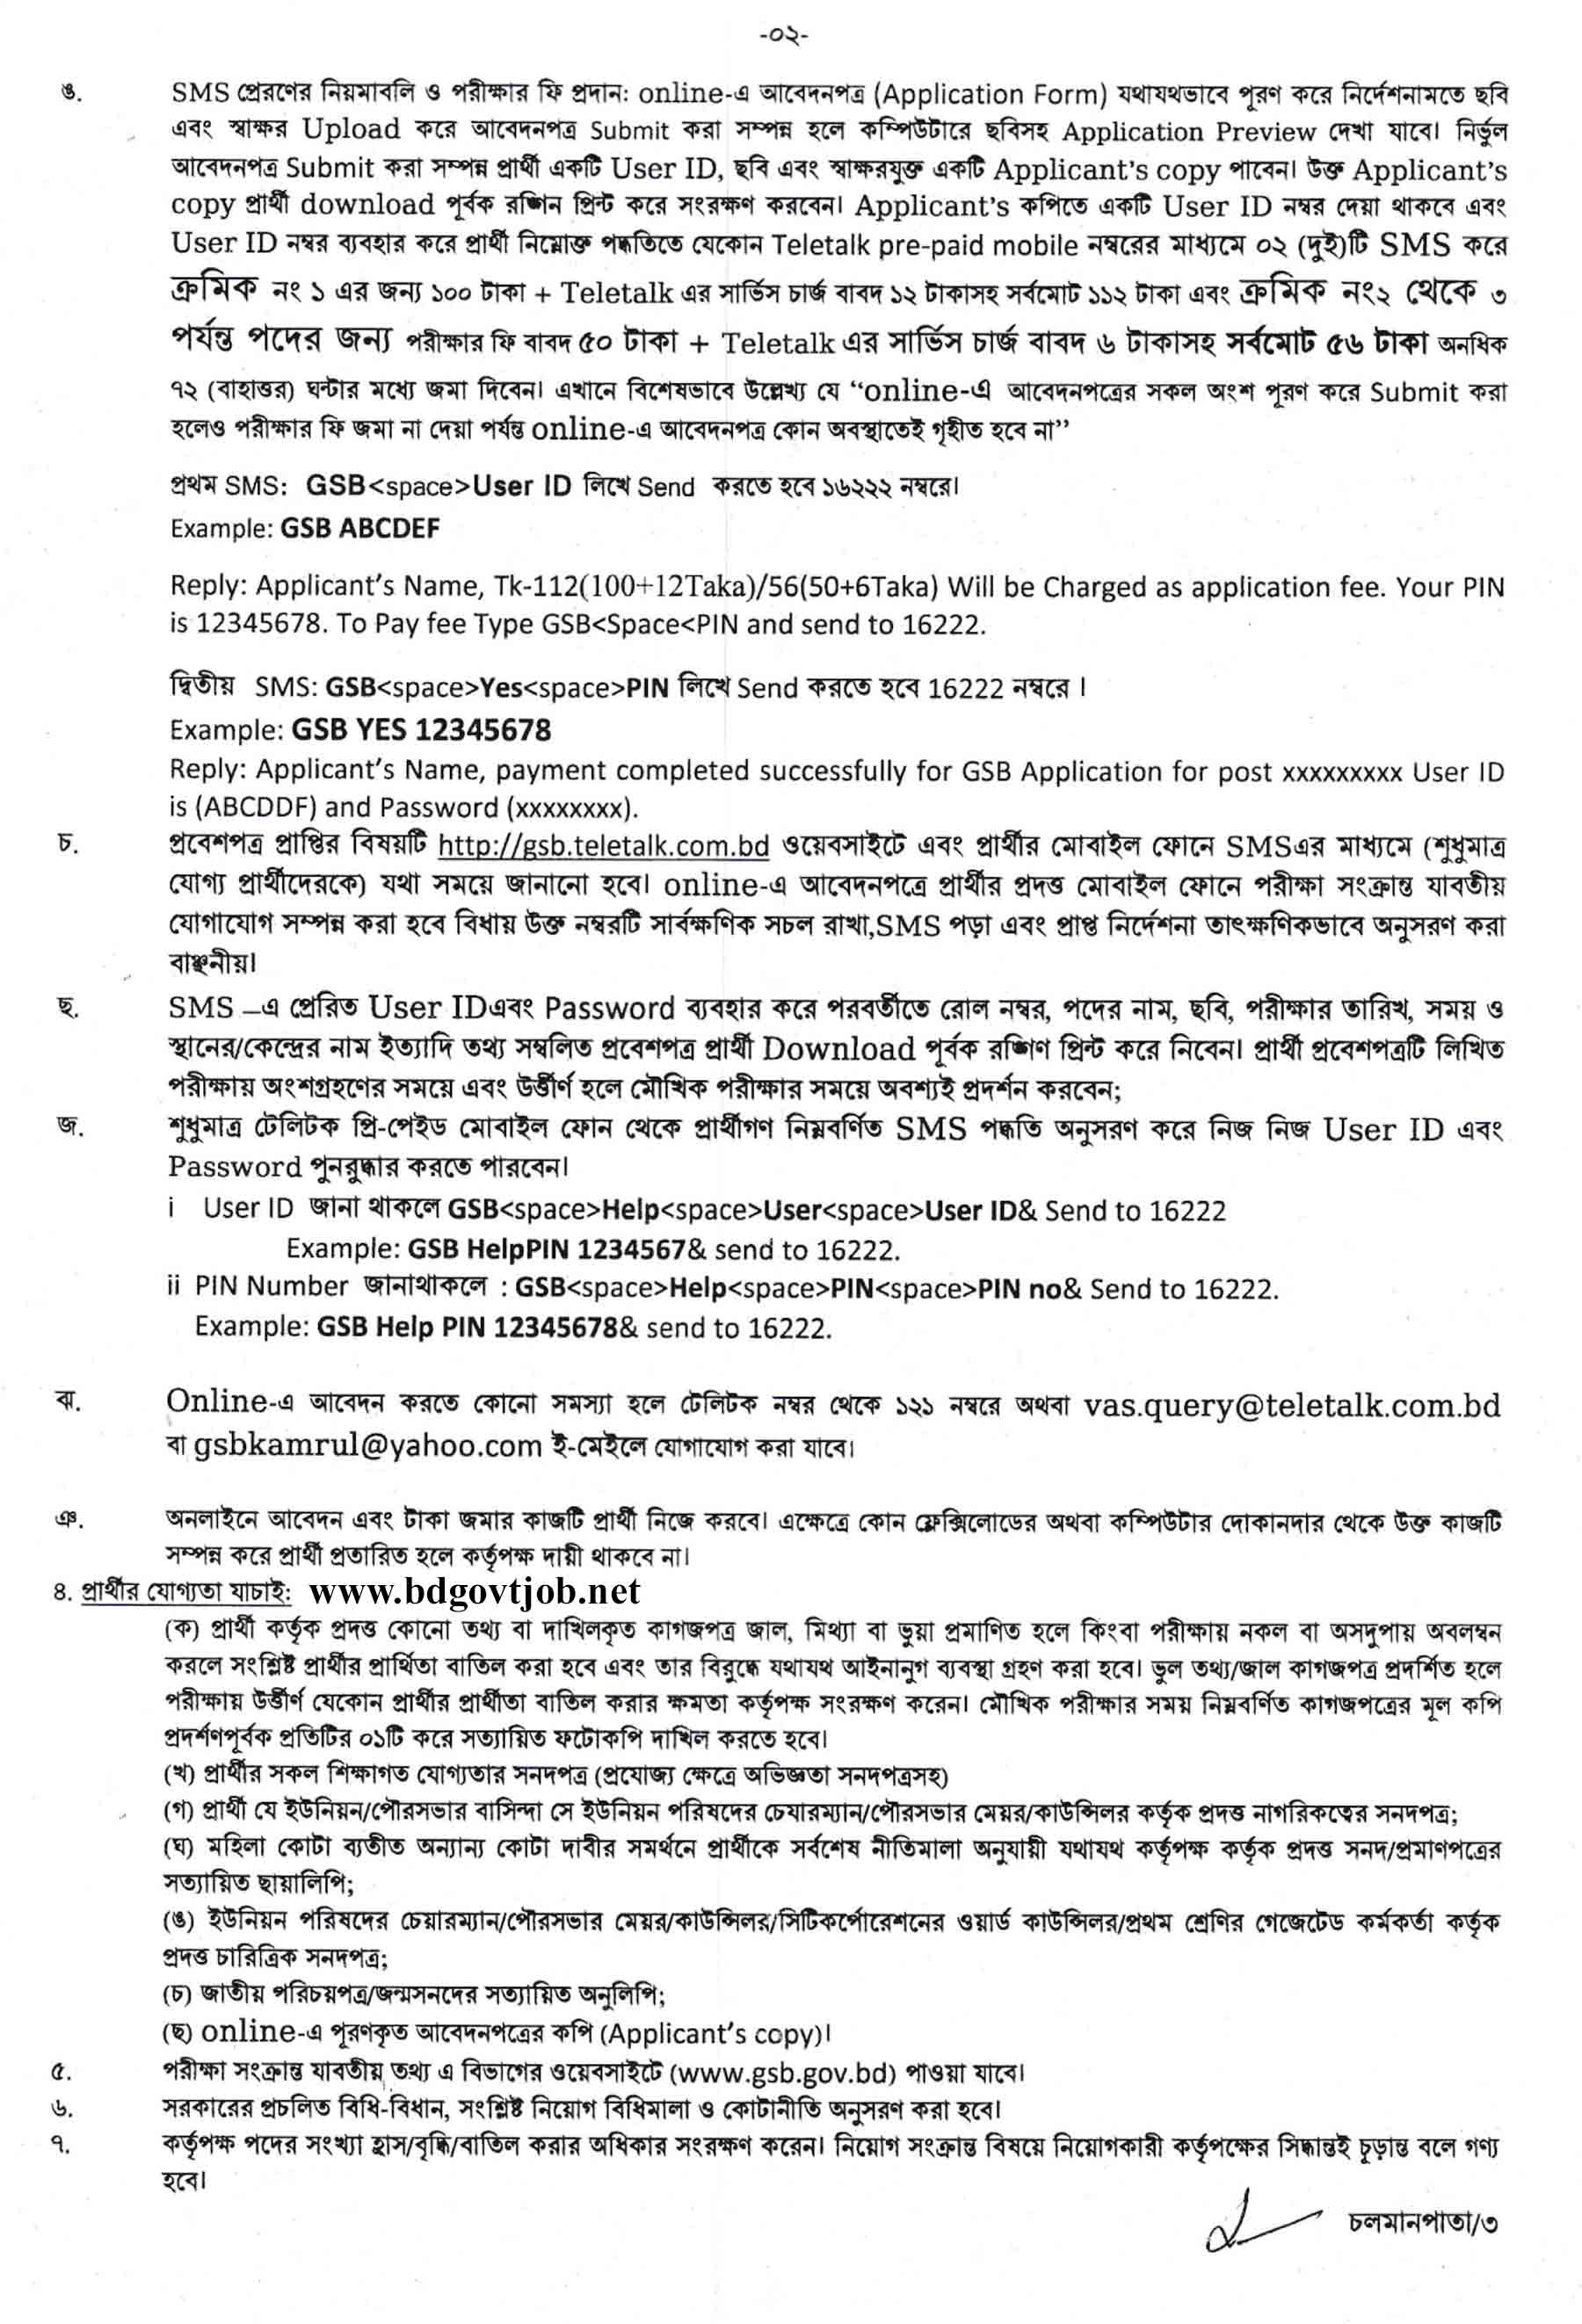 Geological Survey of Bangladesh Job Circular 2021